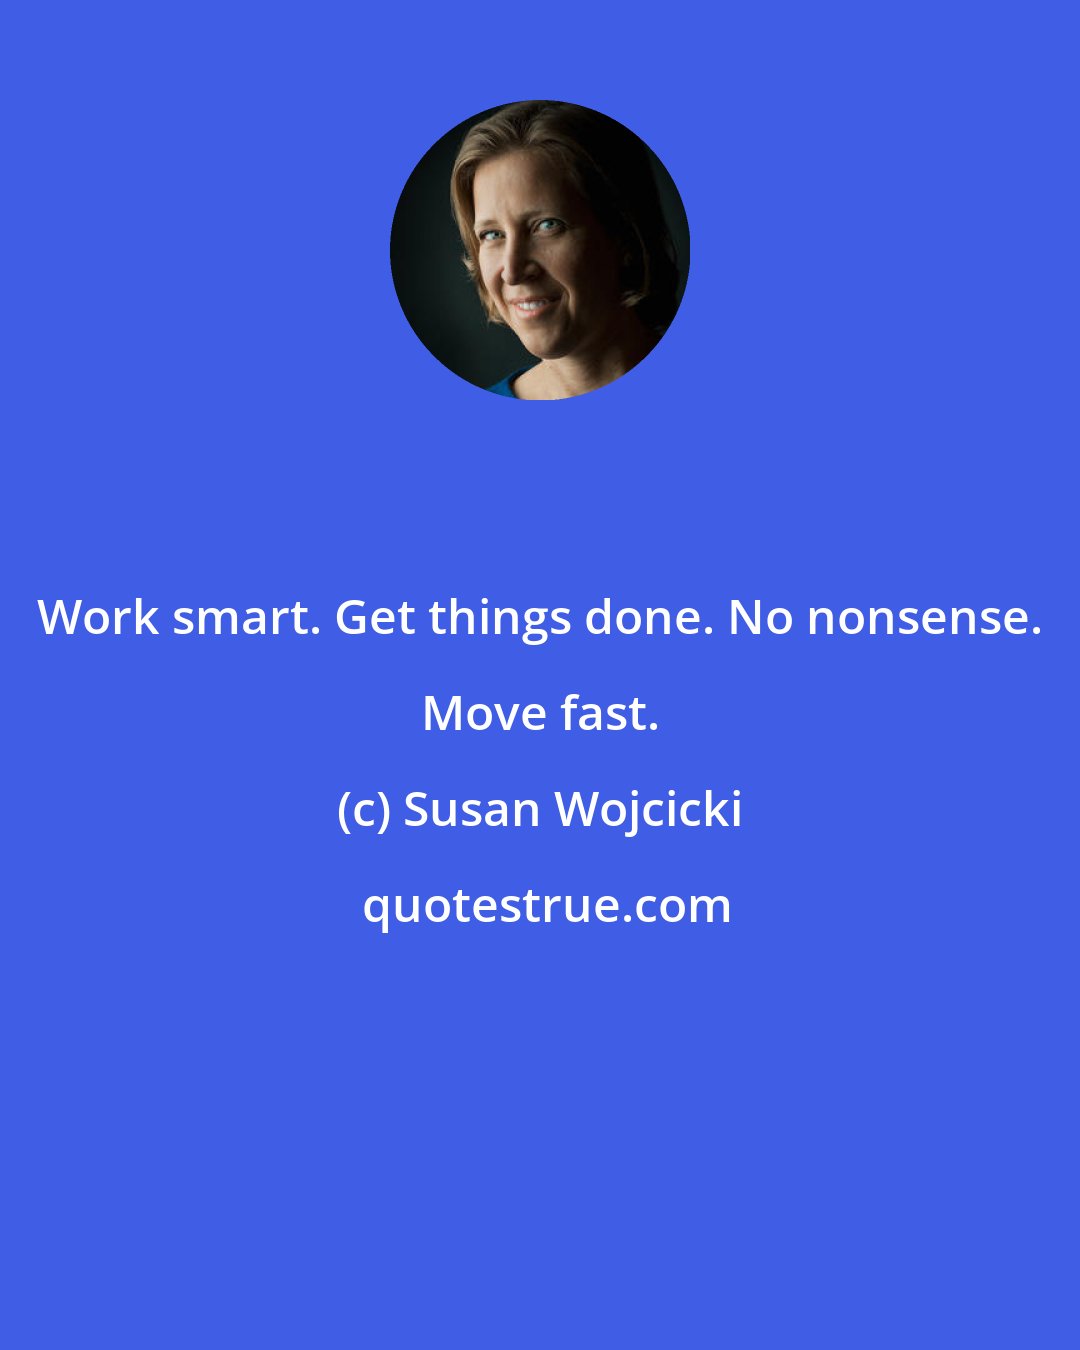 Susan Wojcicki: Work smart. Get things done. No nonsense. Move fast.